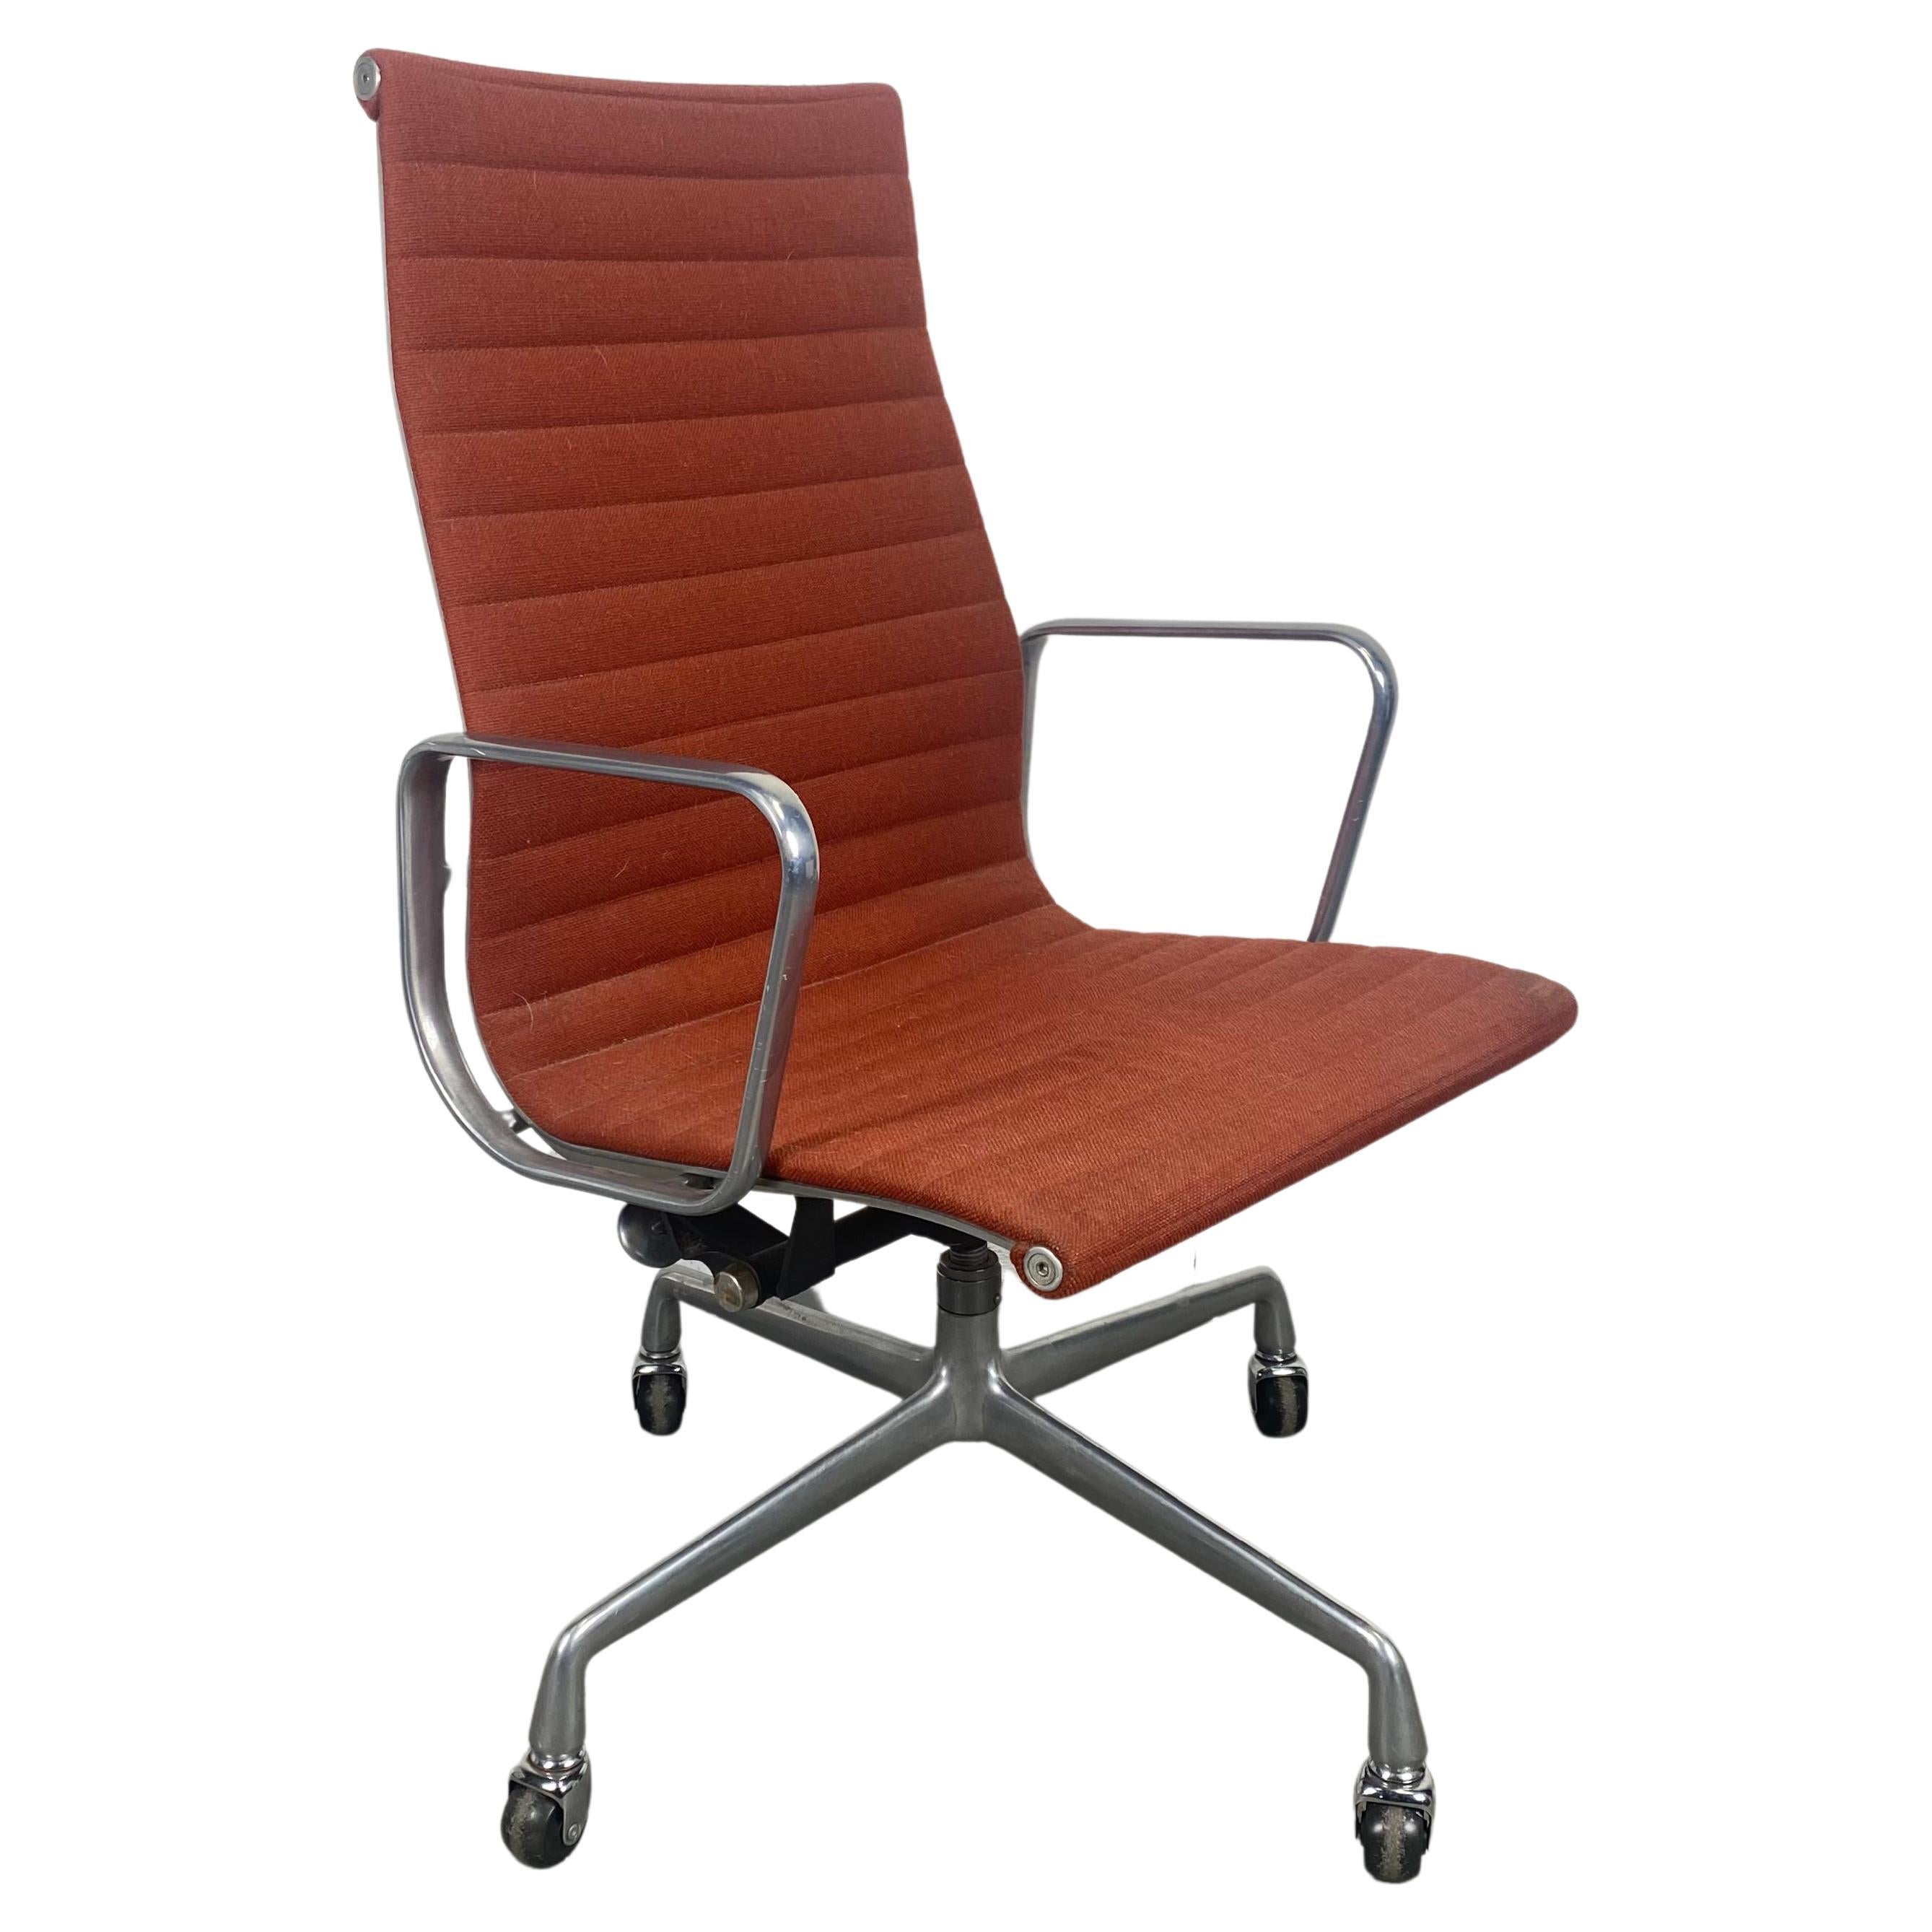 Charles Eames Aluminum Group High Back Desk Chair, Herman Miller / Mid Century